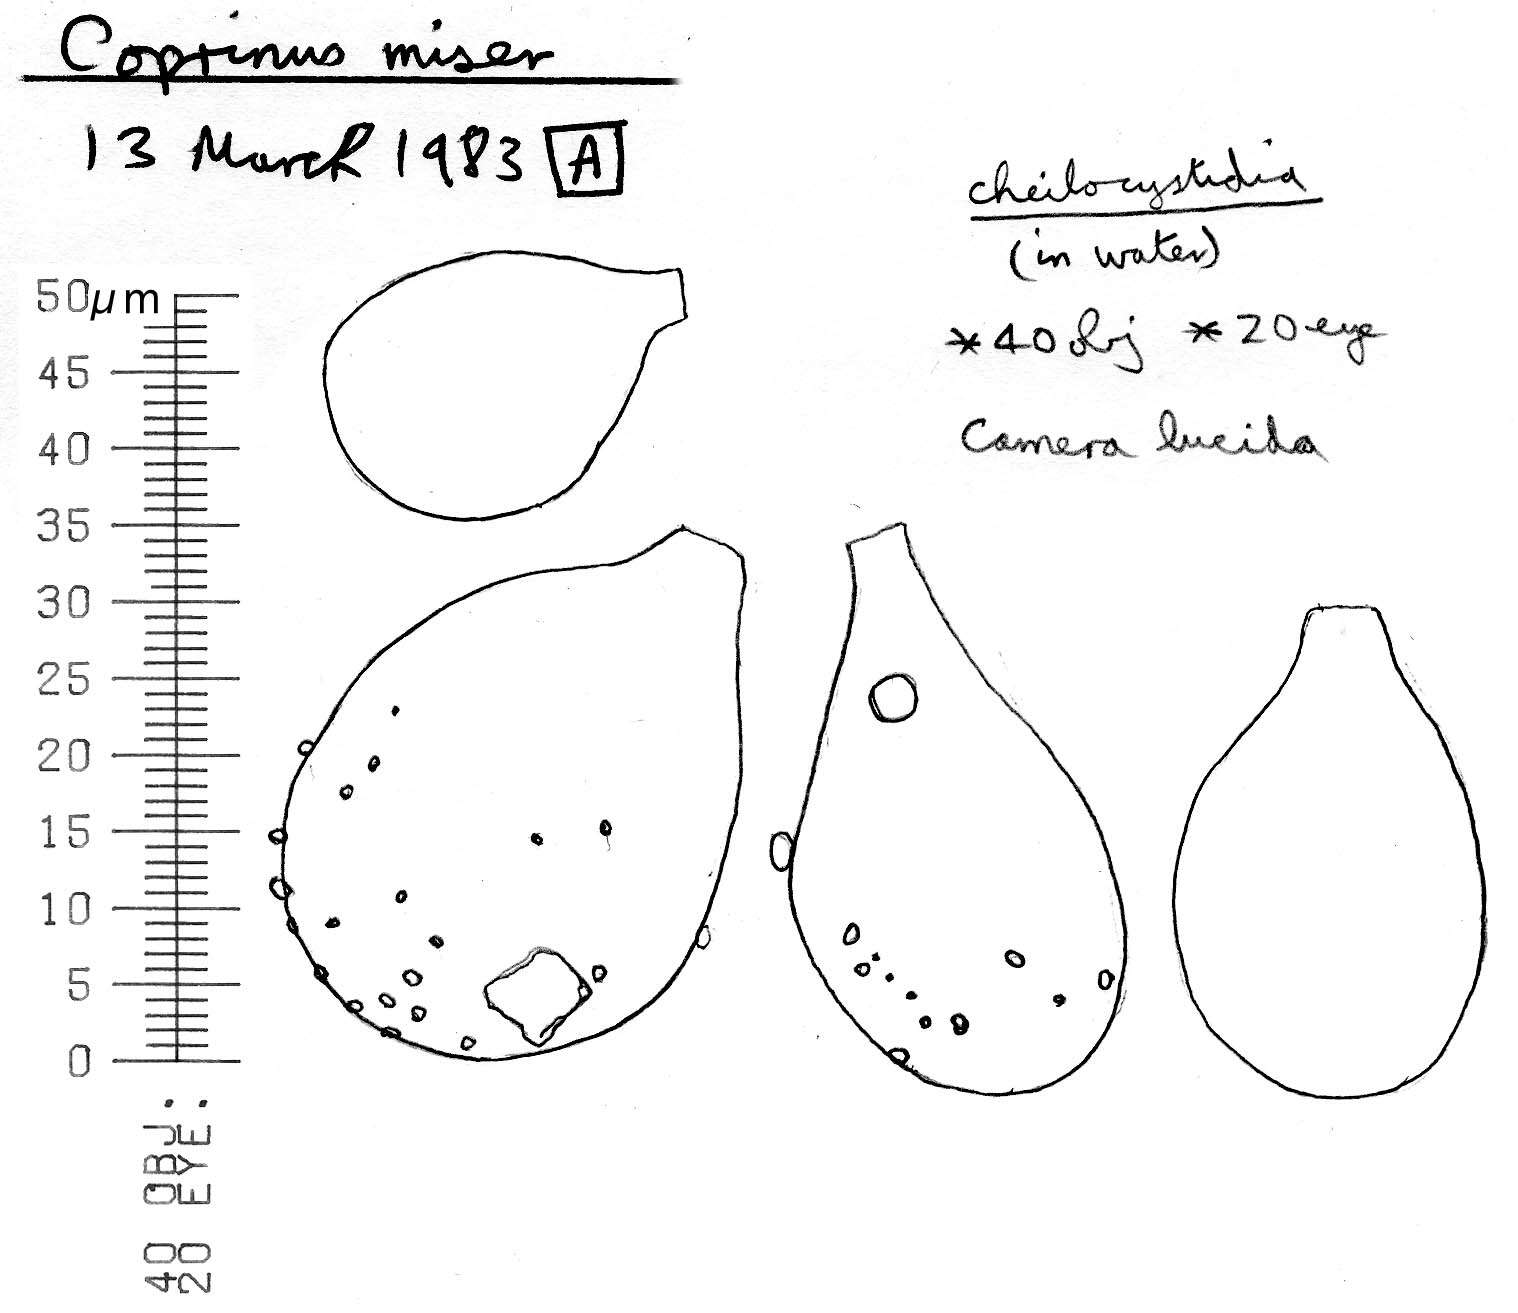 Image of Parasola misera (P. Karst.) Redhead, Vilgalys & Hopple 2001